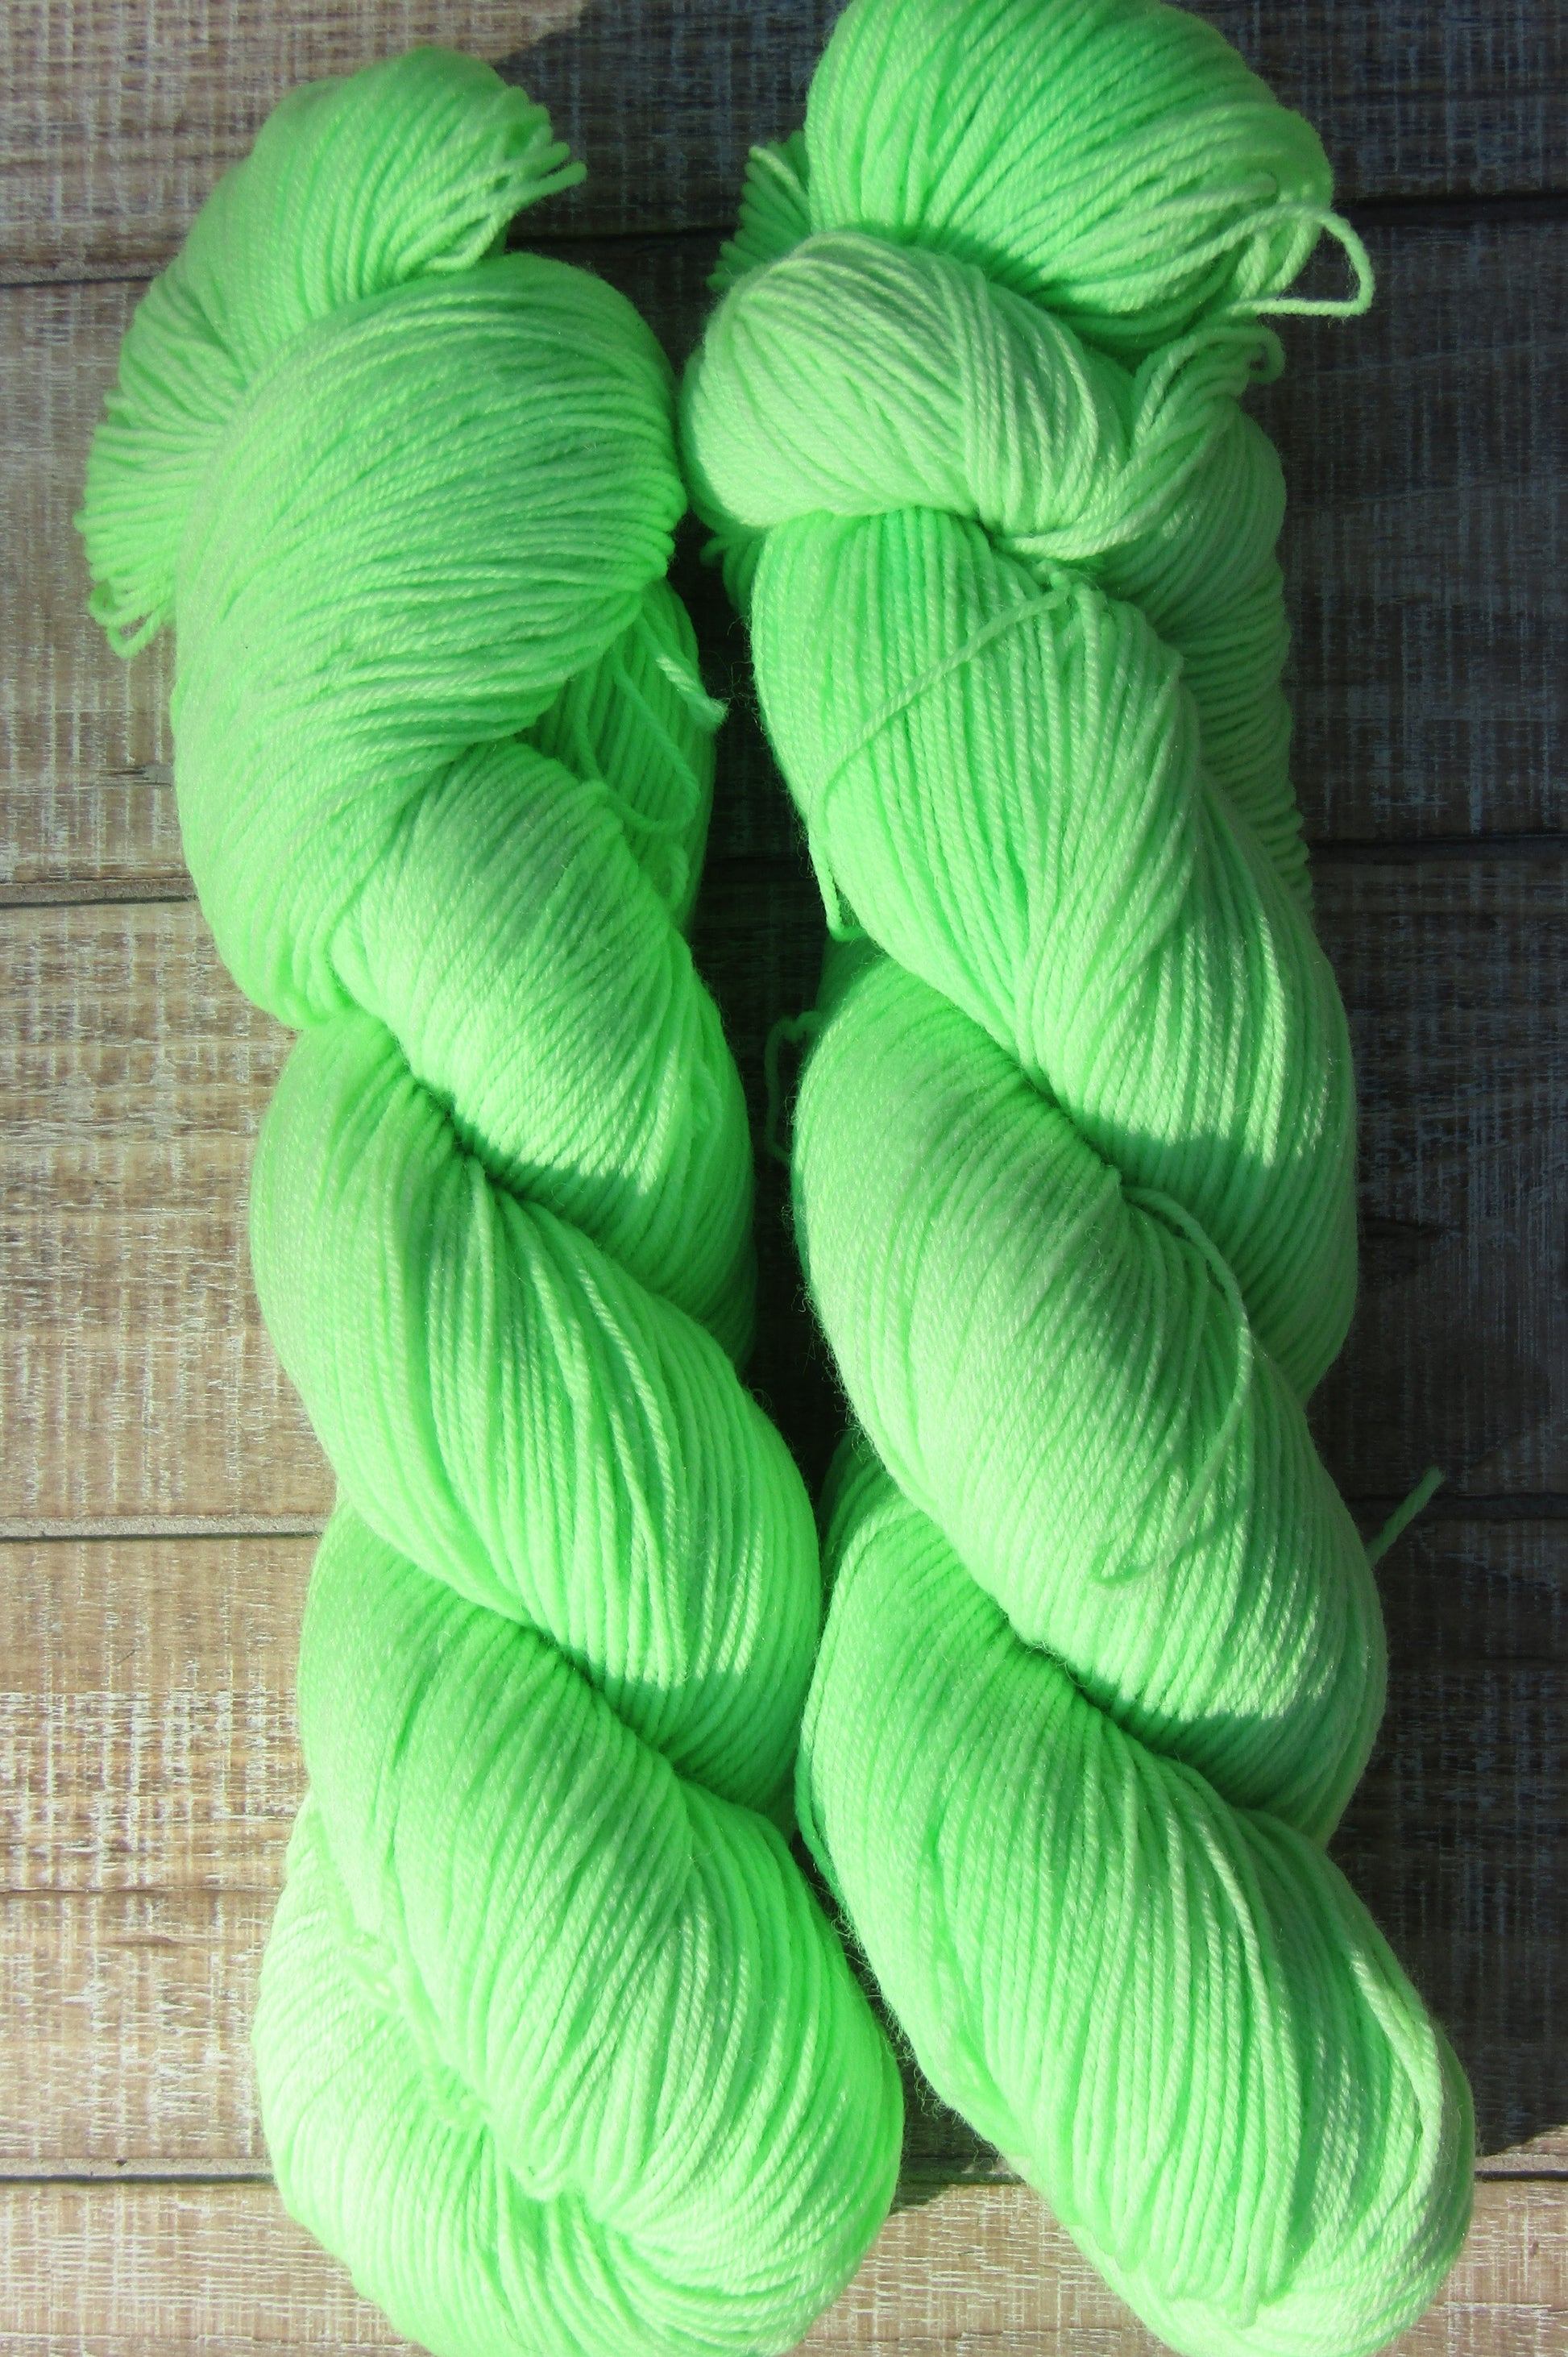 Hand-Dyed Yarn in Kelly green.